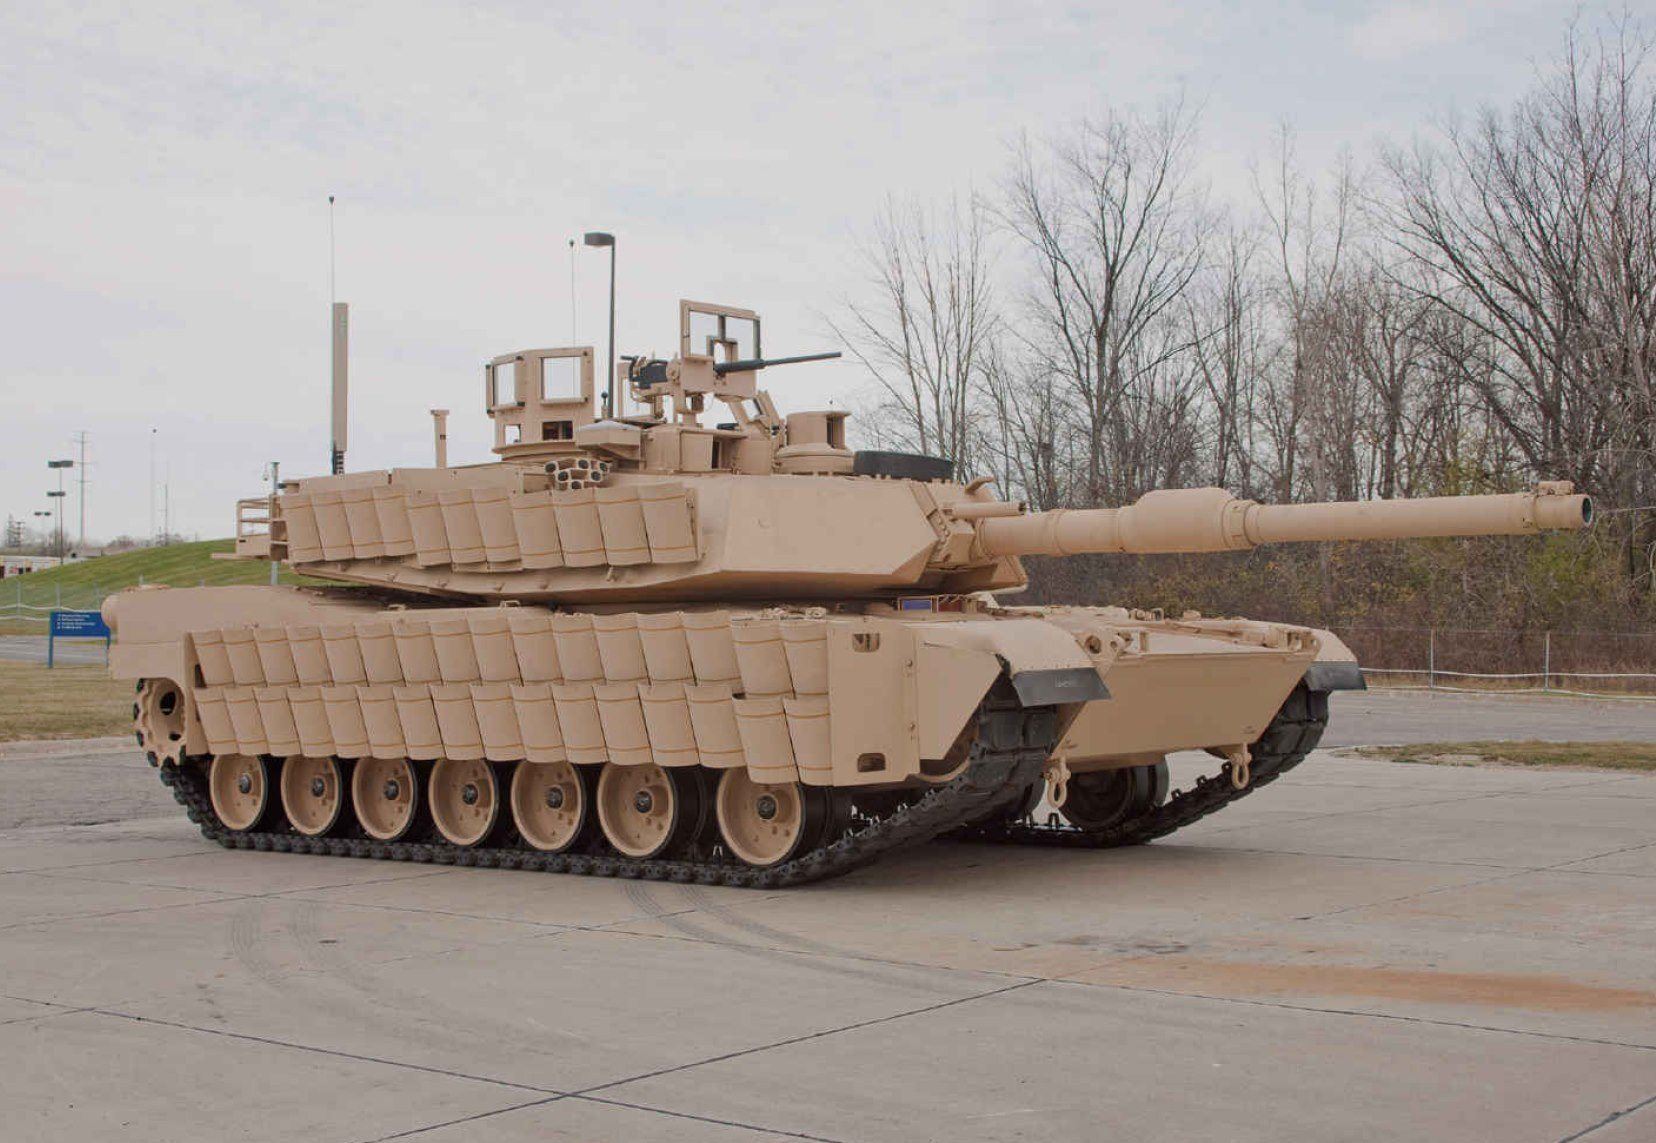 Tank M1 Abrams with armor protection Tank Urban Survival Kit (TUSK)